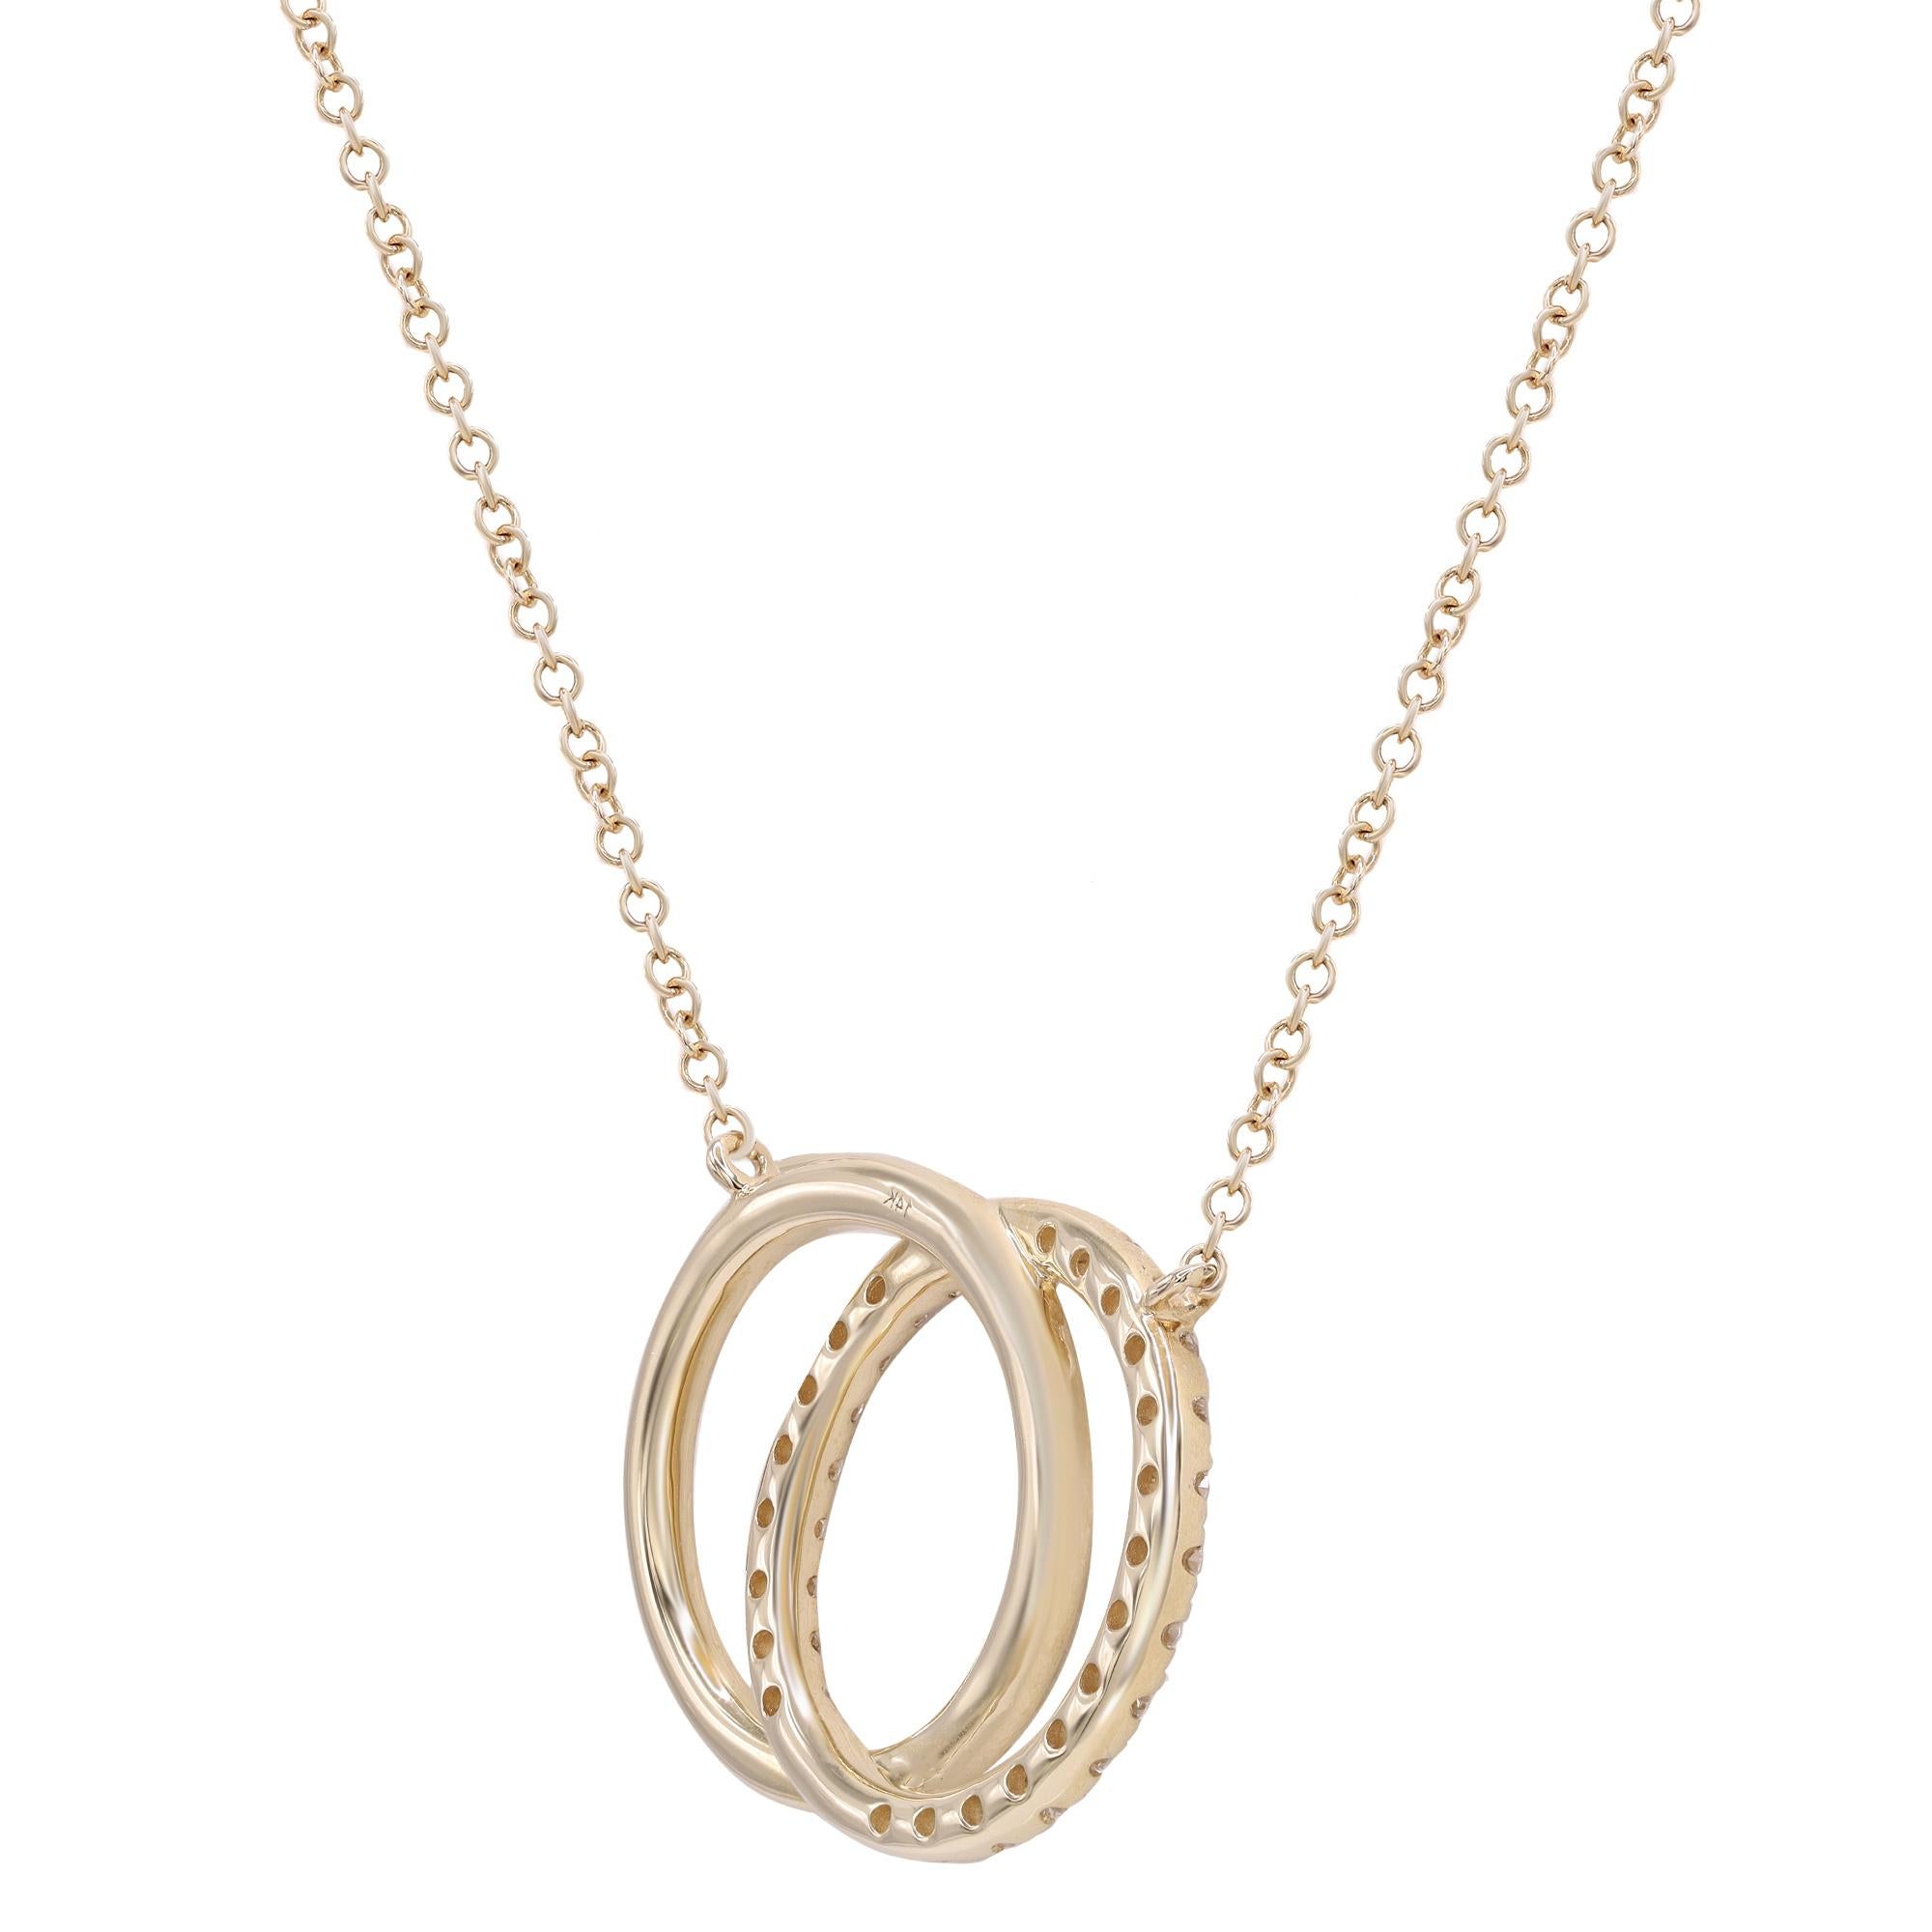 Round Cut Rachel Koen Diamond Interlocking Rings Pendant Necklace 14K Yellow Gold 0.31cttw For Sale